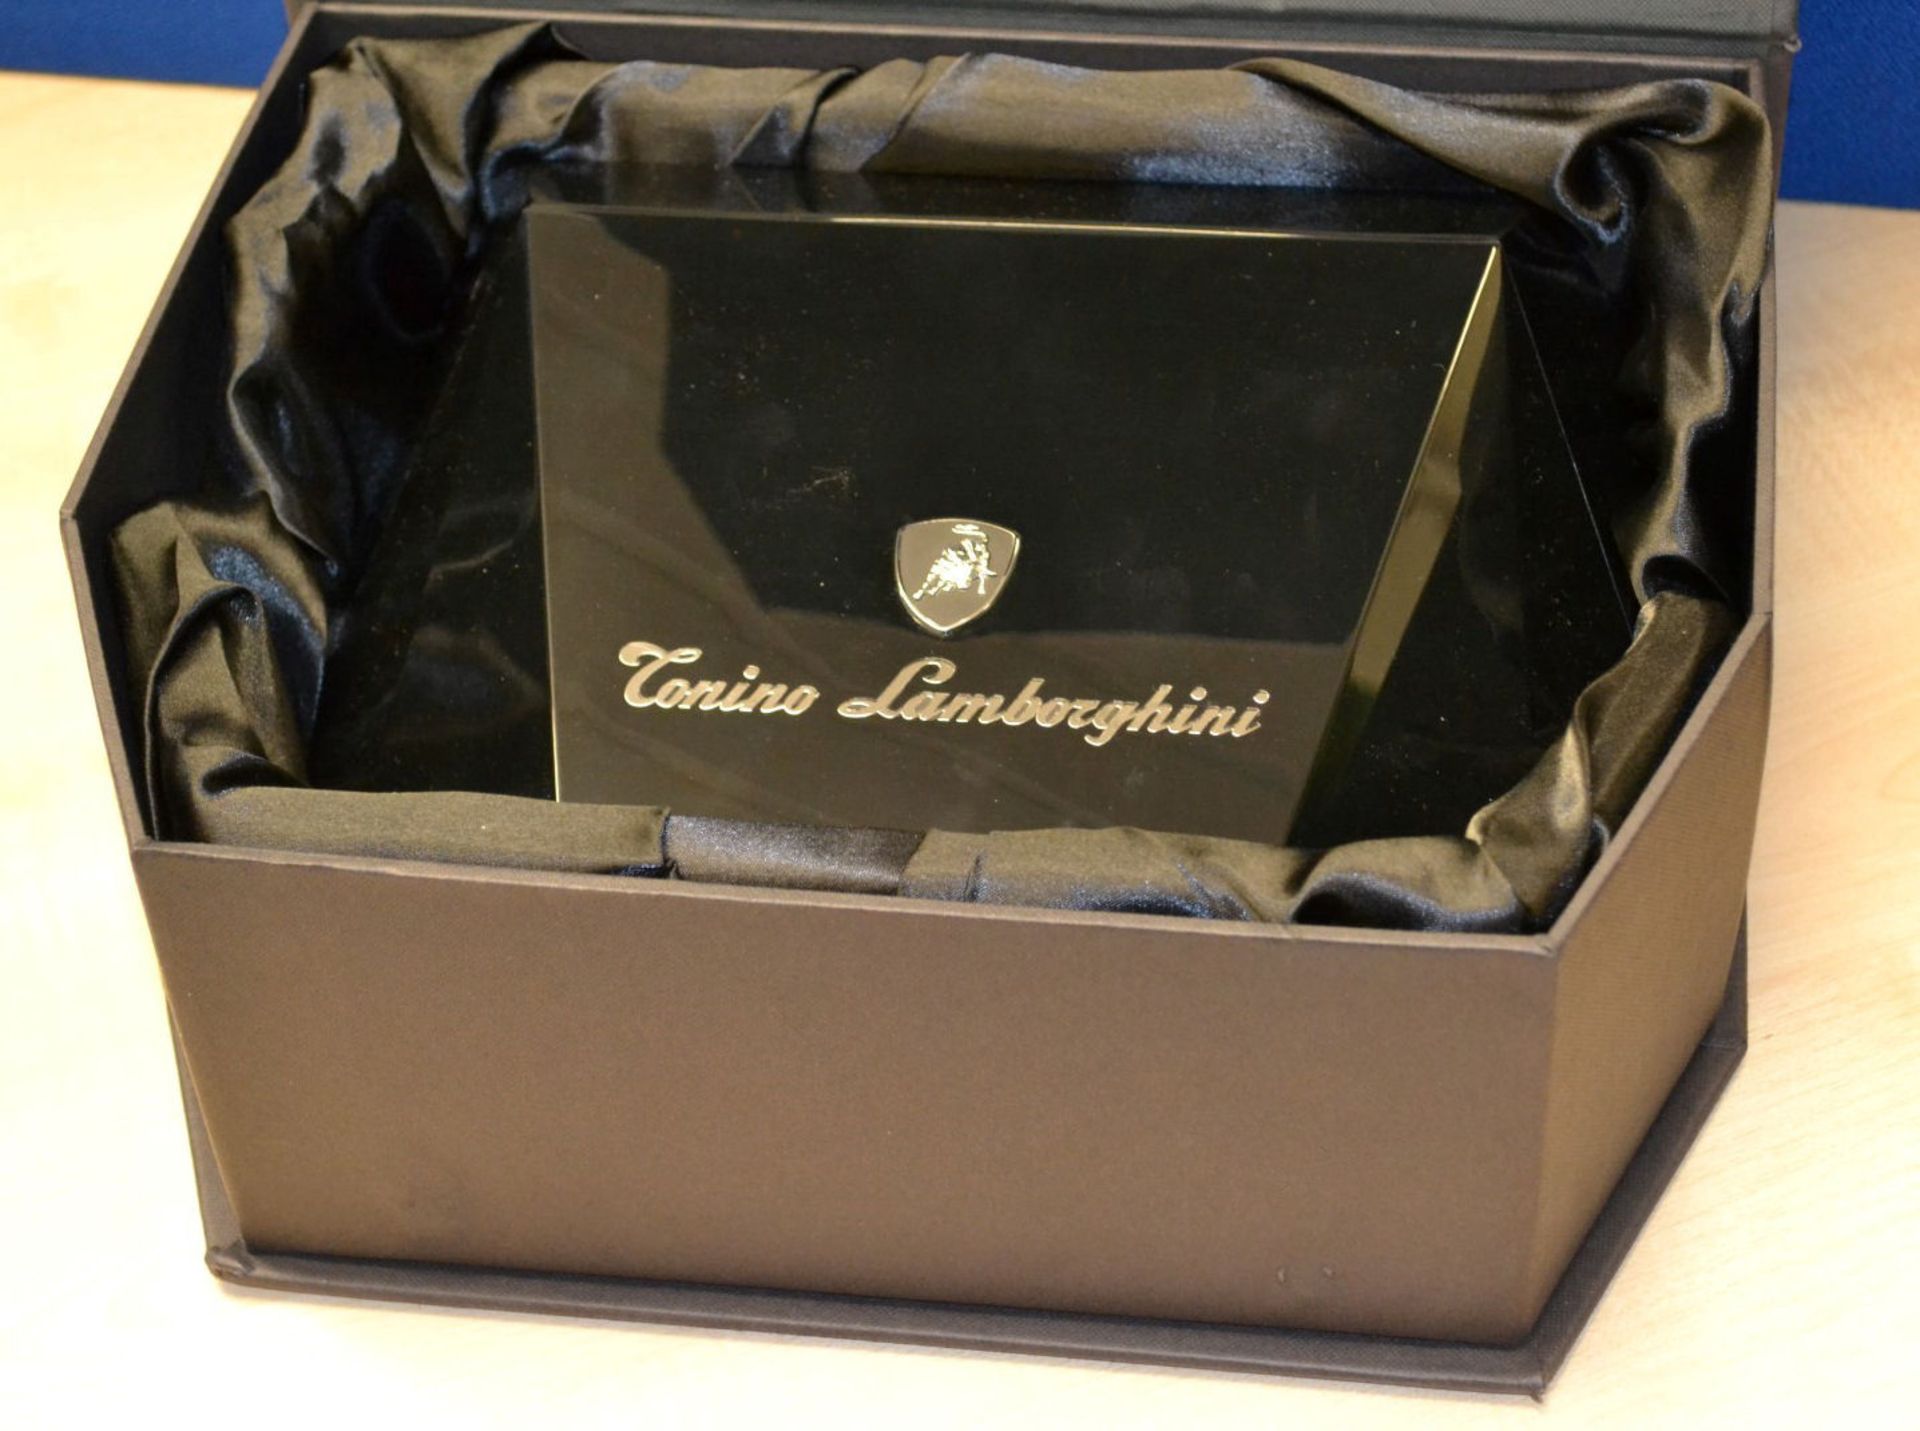 1 x Limited Edition Lamborghini "88 Tauri" Android Smart Phone - Leather Snakeskin-Style Finish - Image 10 of 26